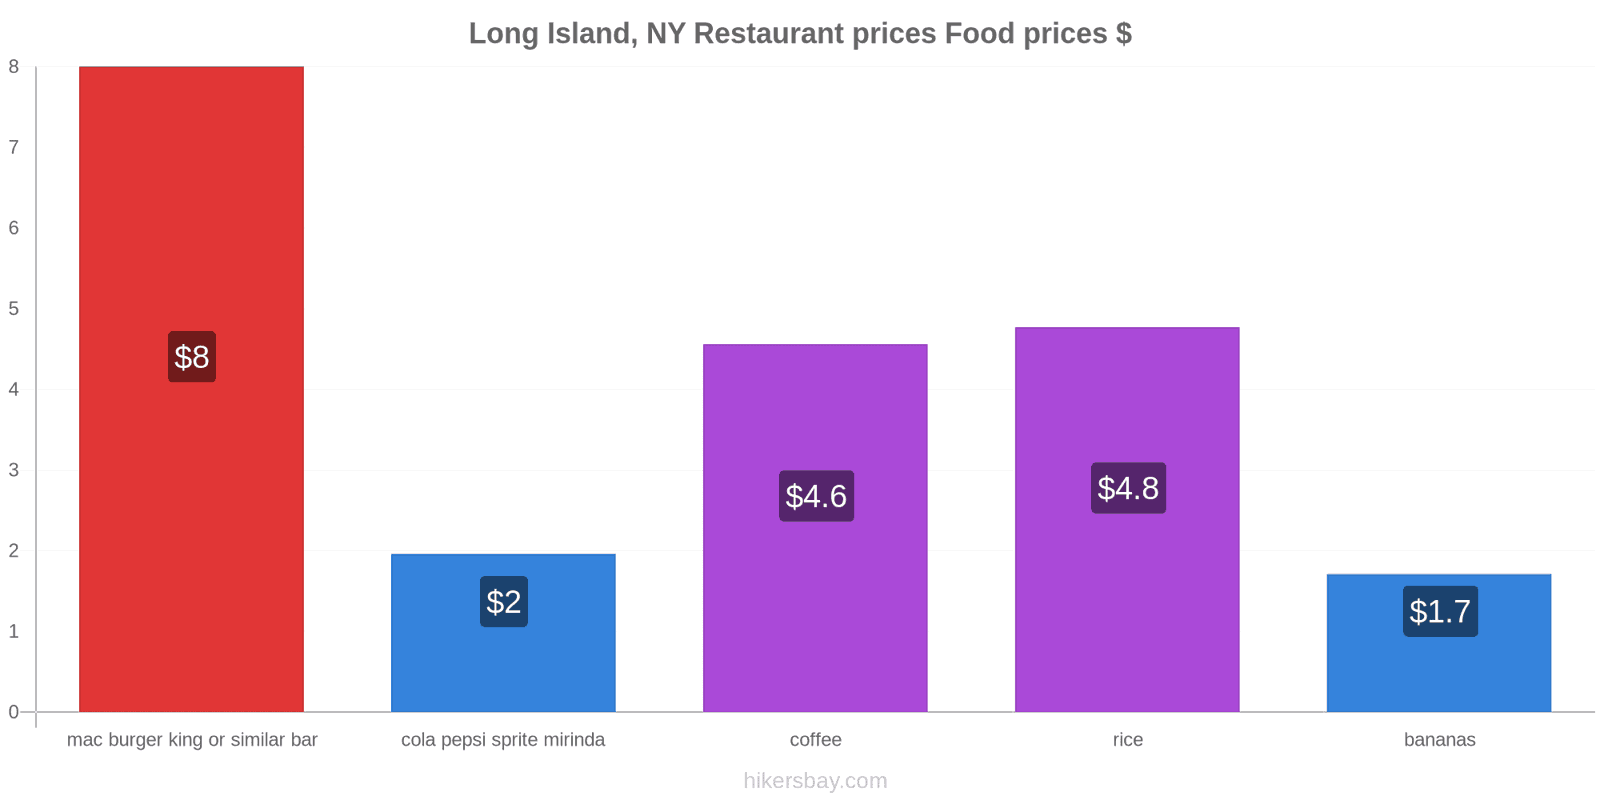 Long Island, NY price changes hikersbay.com